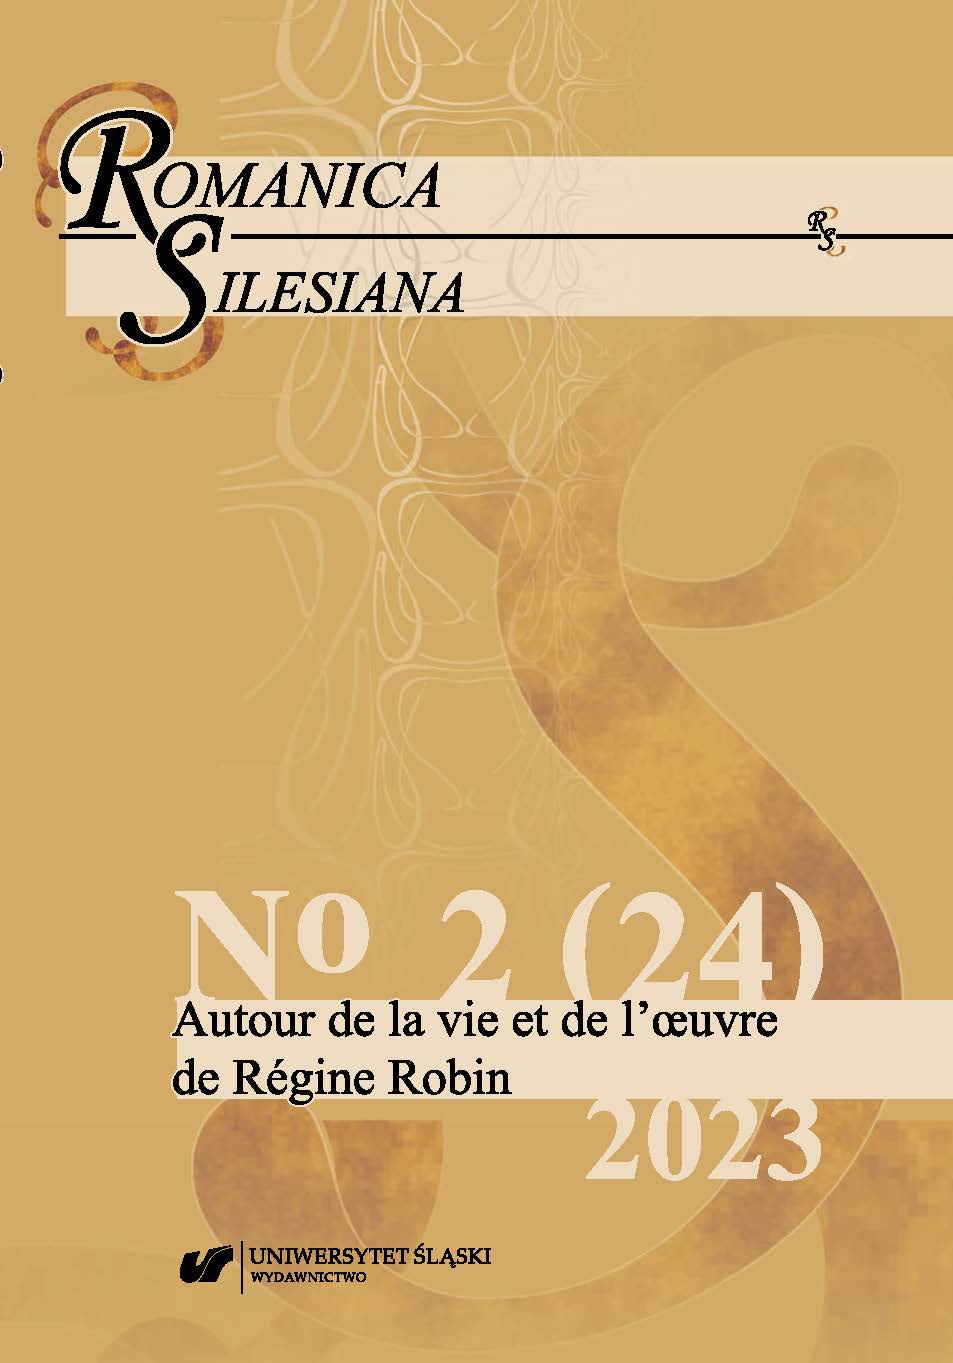 Transfiguration of the persona: Régine, UQAM Read Building, into 1977 Cover Image